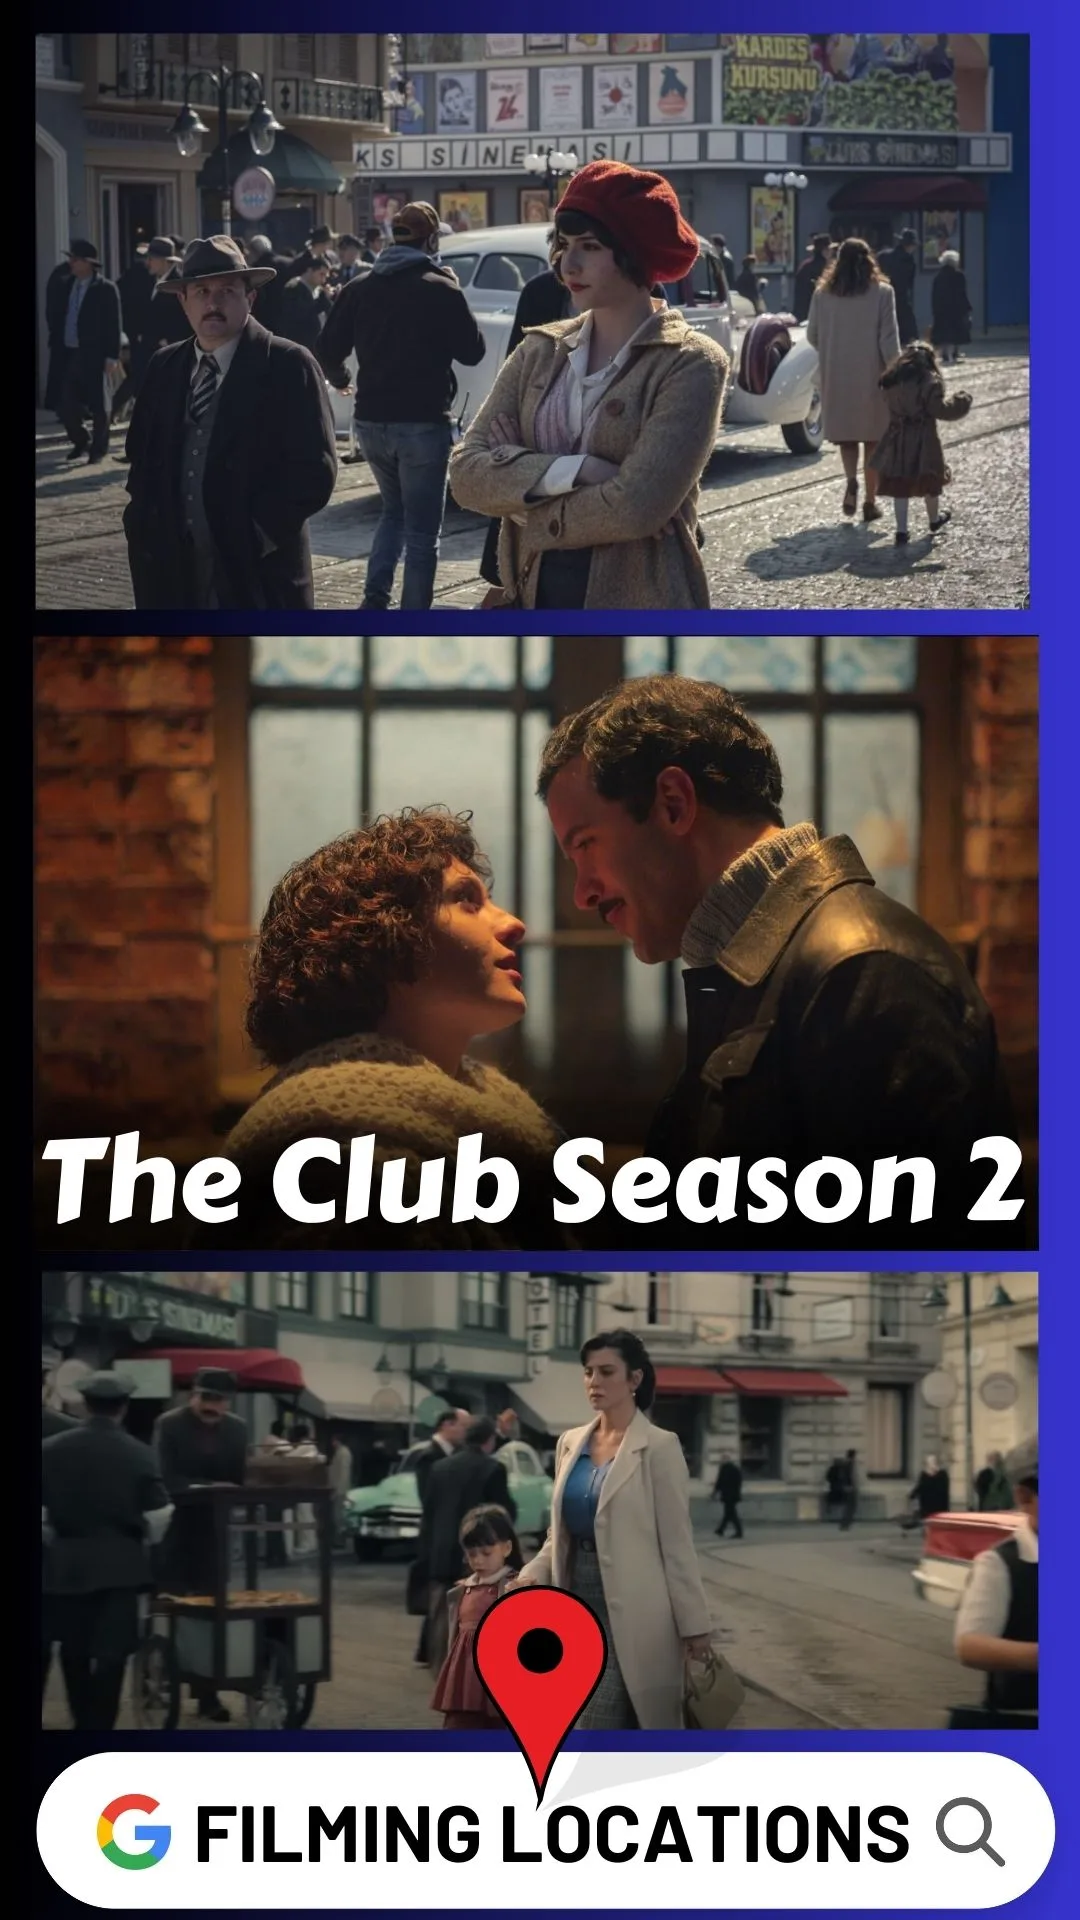 The Club Season 2 Filming Locations